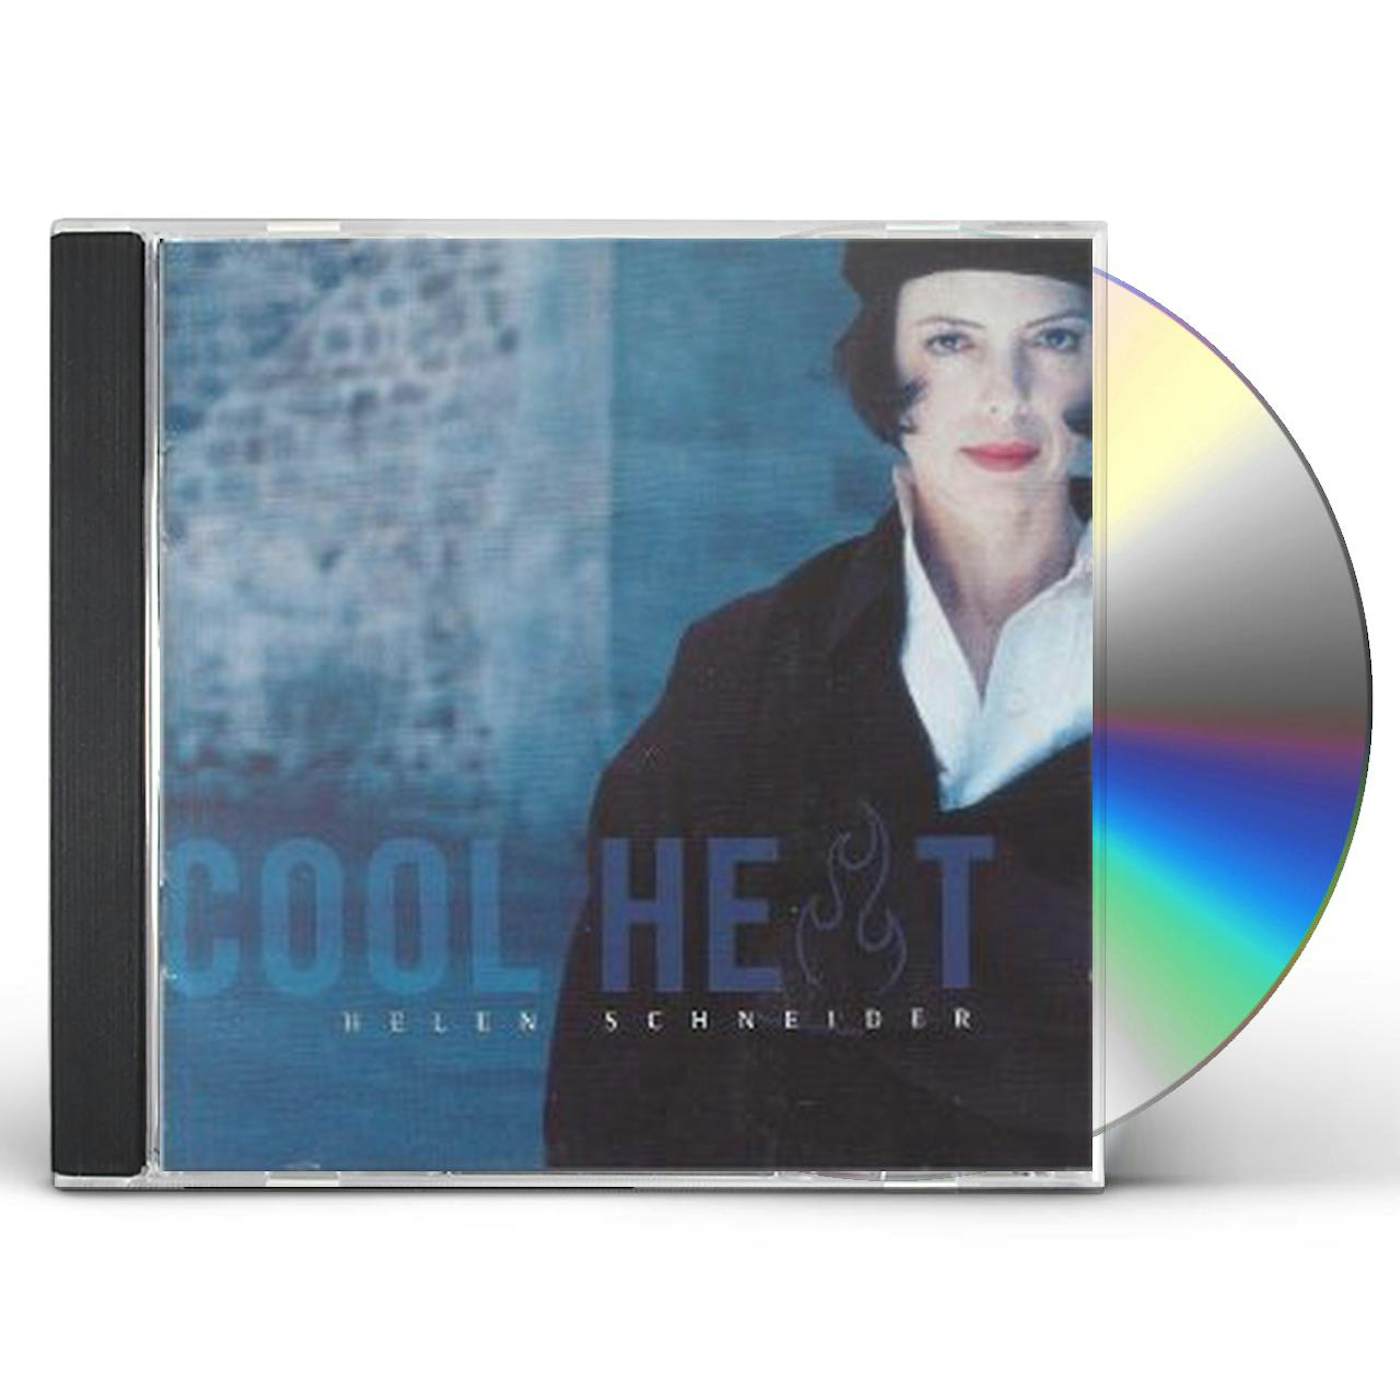 Helen Schneider COOL HEAT CD